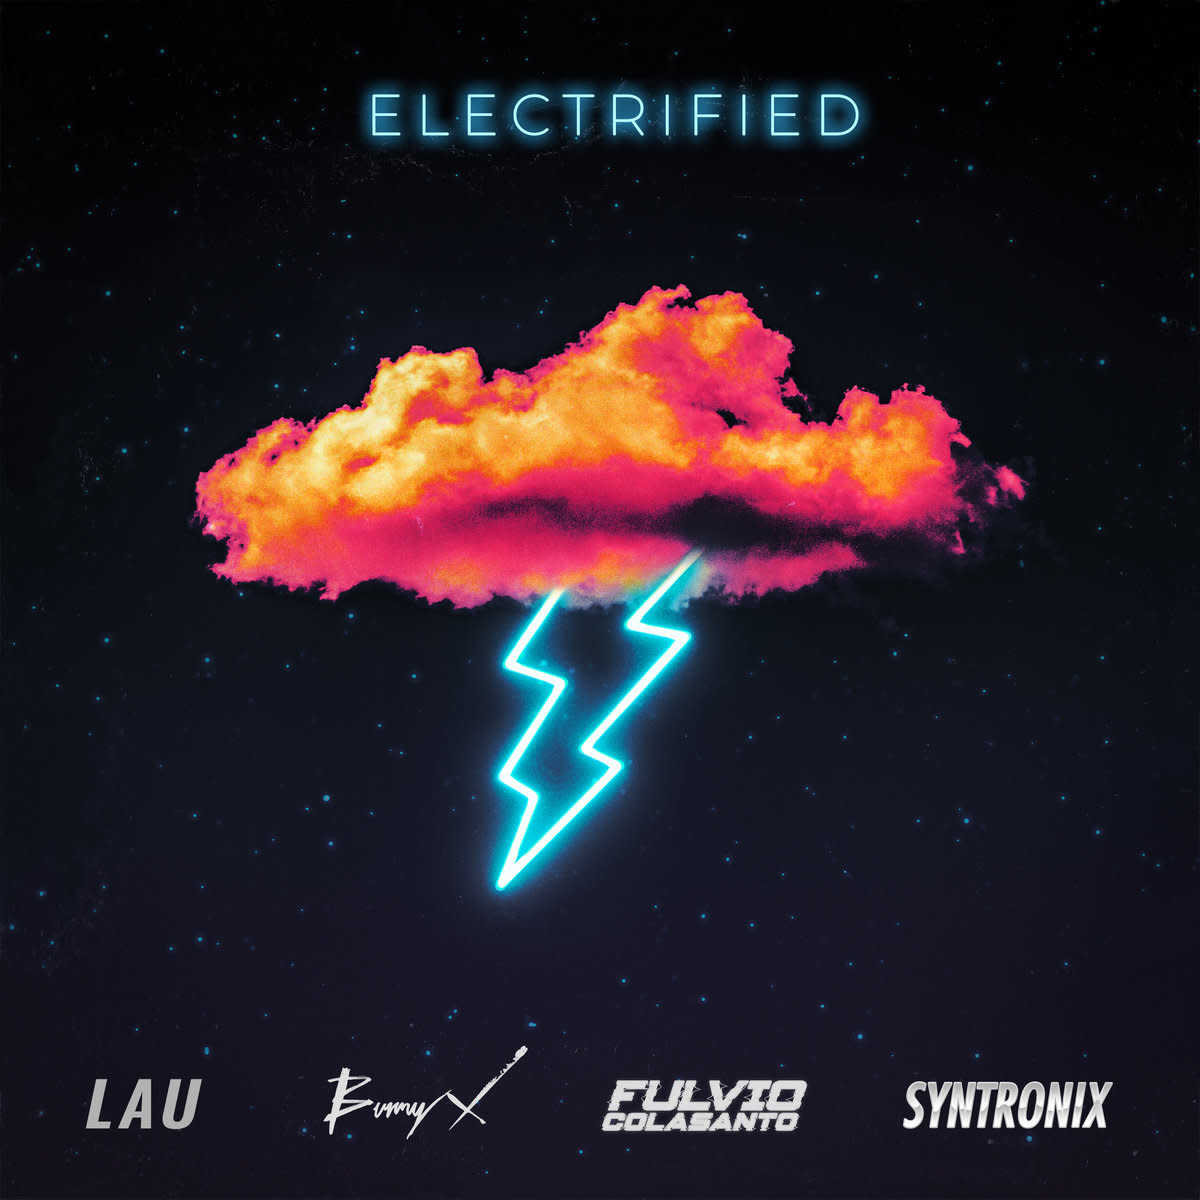 Synth Single Review: “Electrified’’ by Fulvio Colasanto, LAU, Bunny X & Syntronix